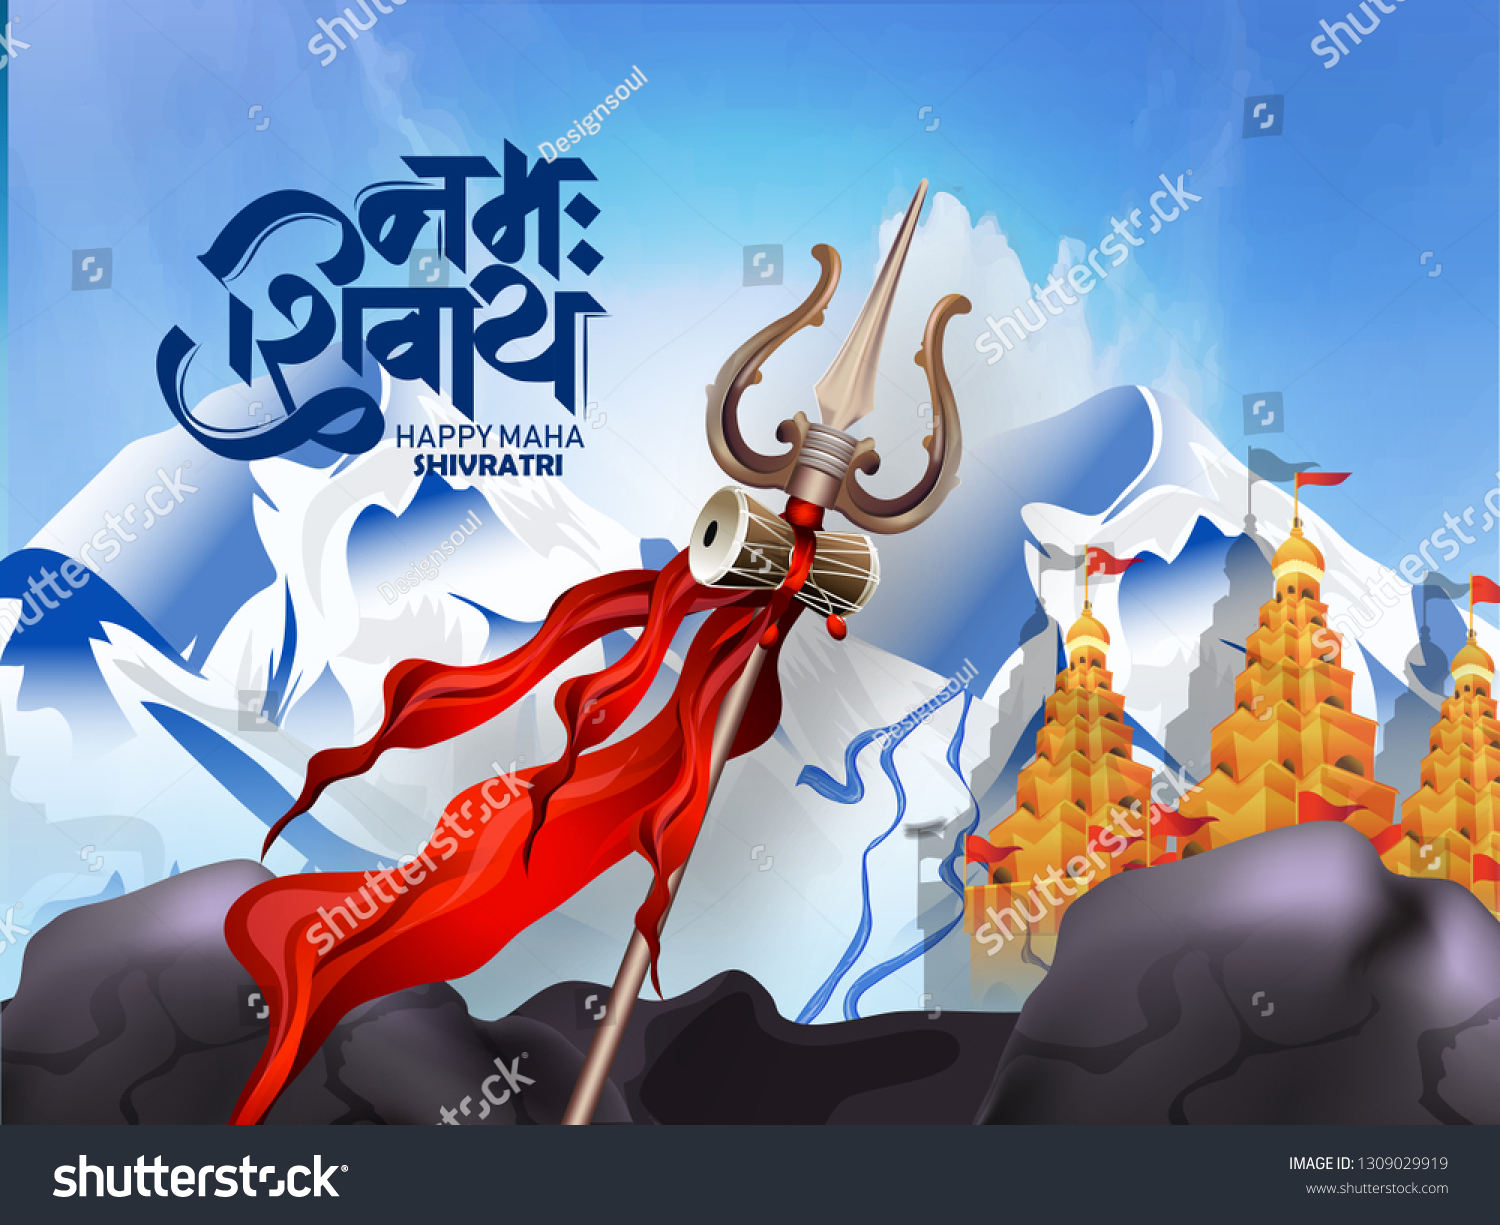 Illustration Greeting Card Maha Shivratri Hindu Stock Vector Royalty Free 1309029919 6599